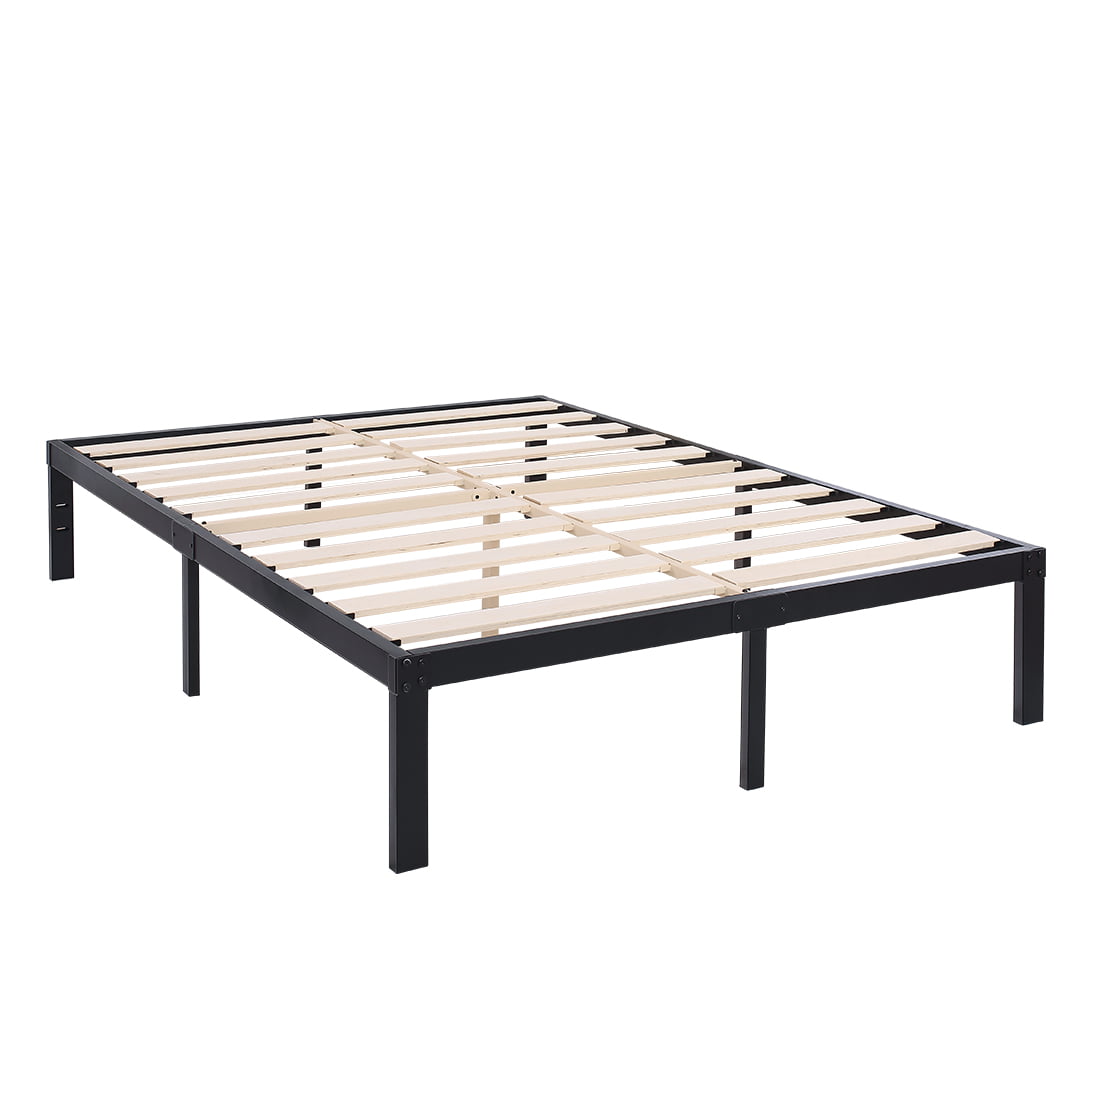 FULL SIZE Platform Bed Frame Strong Steel with Wood Slats Mattress Foundation 